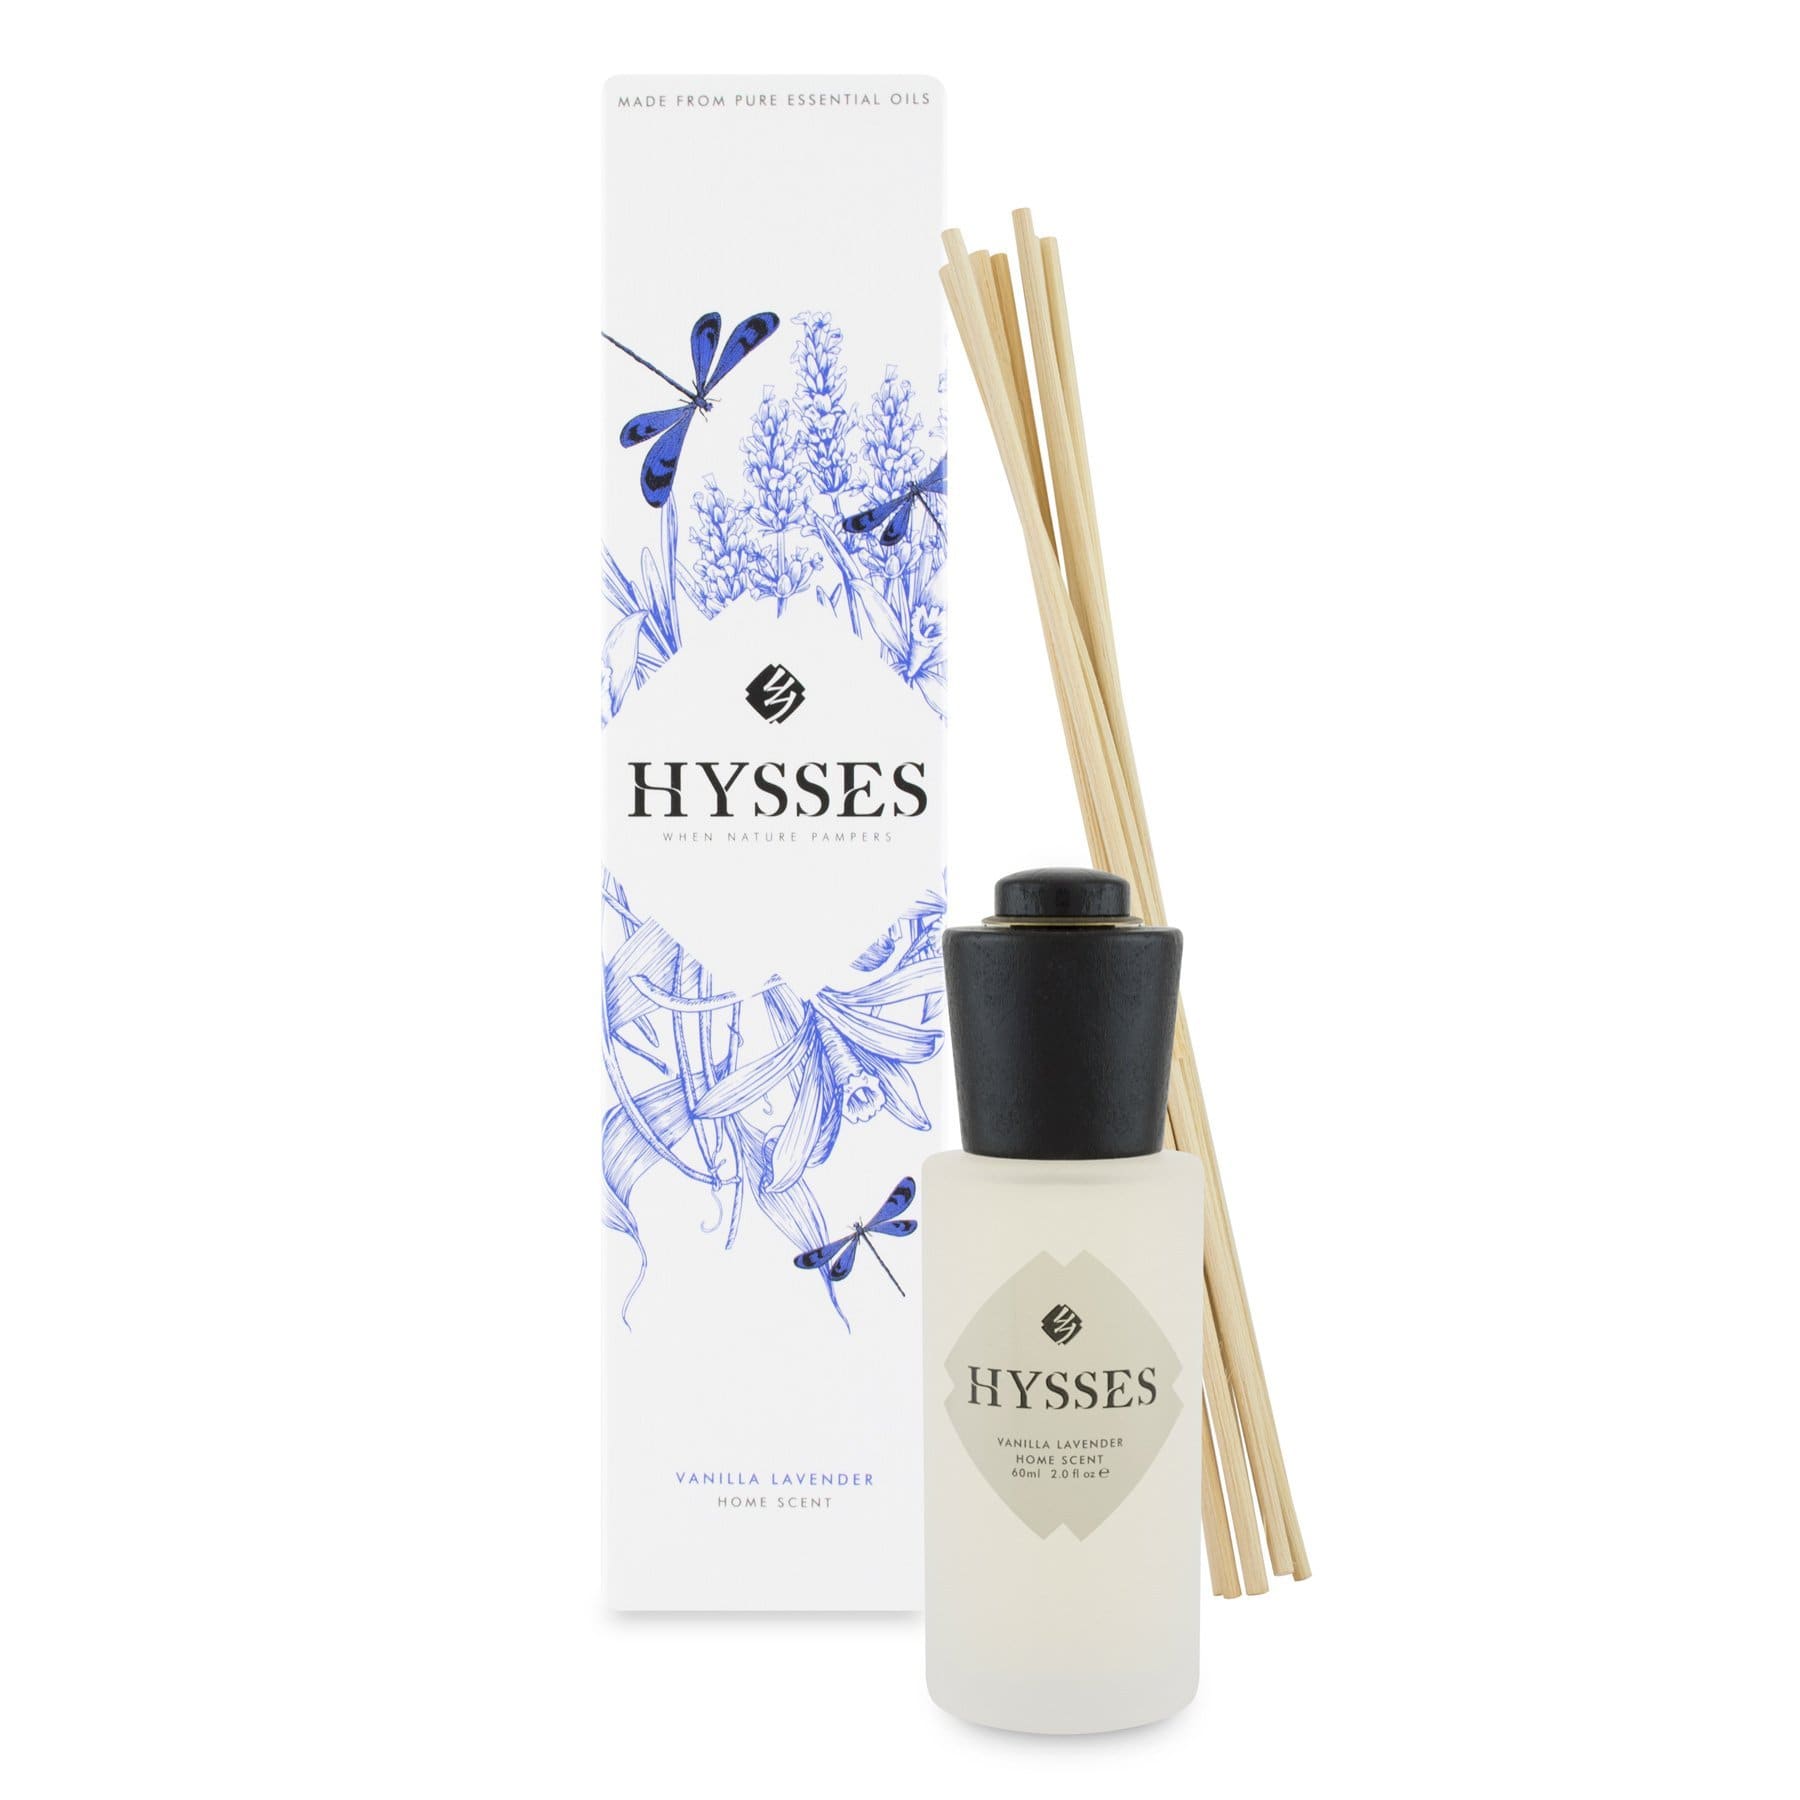 Hysses Home Scents 60ml Home Scent Reed Diffuser Vanilla Lavender